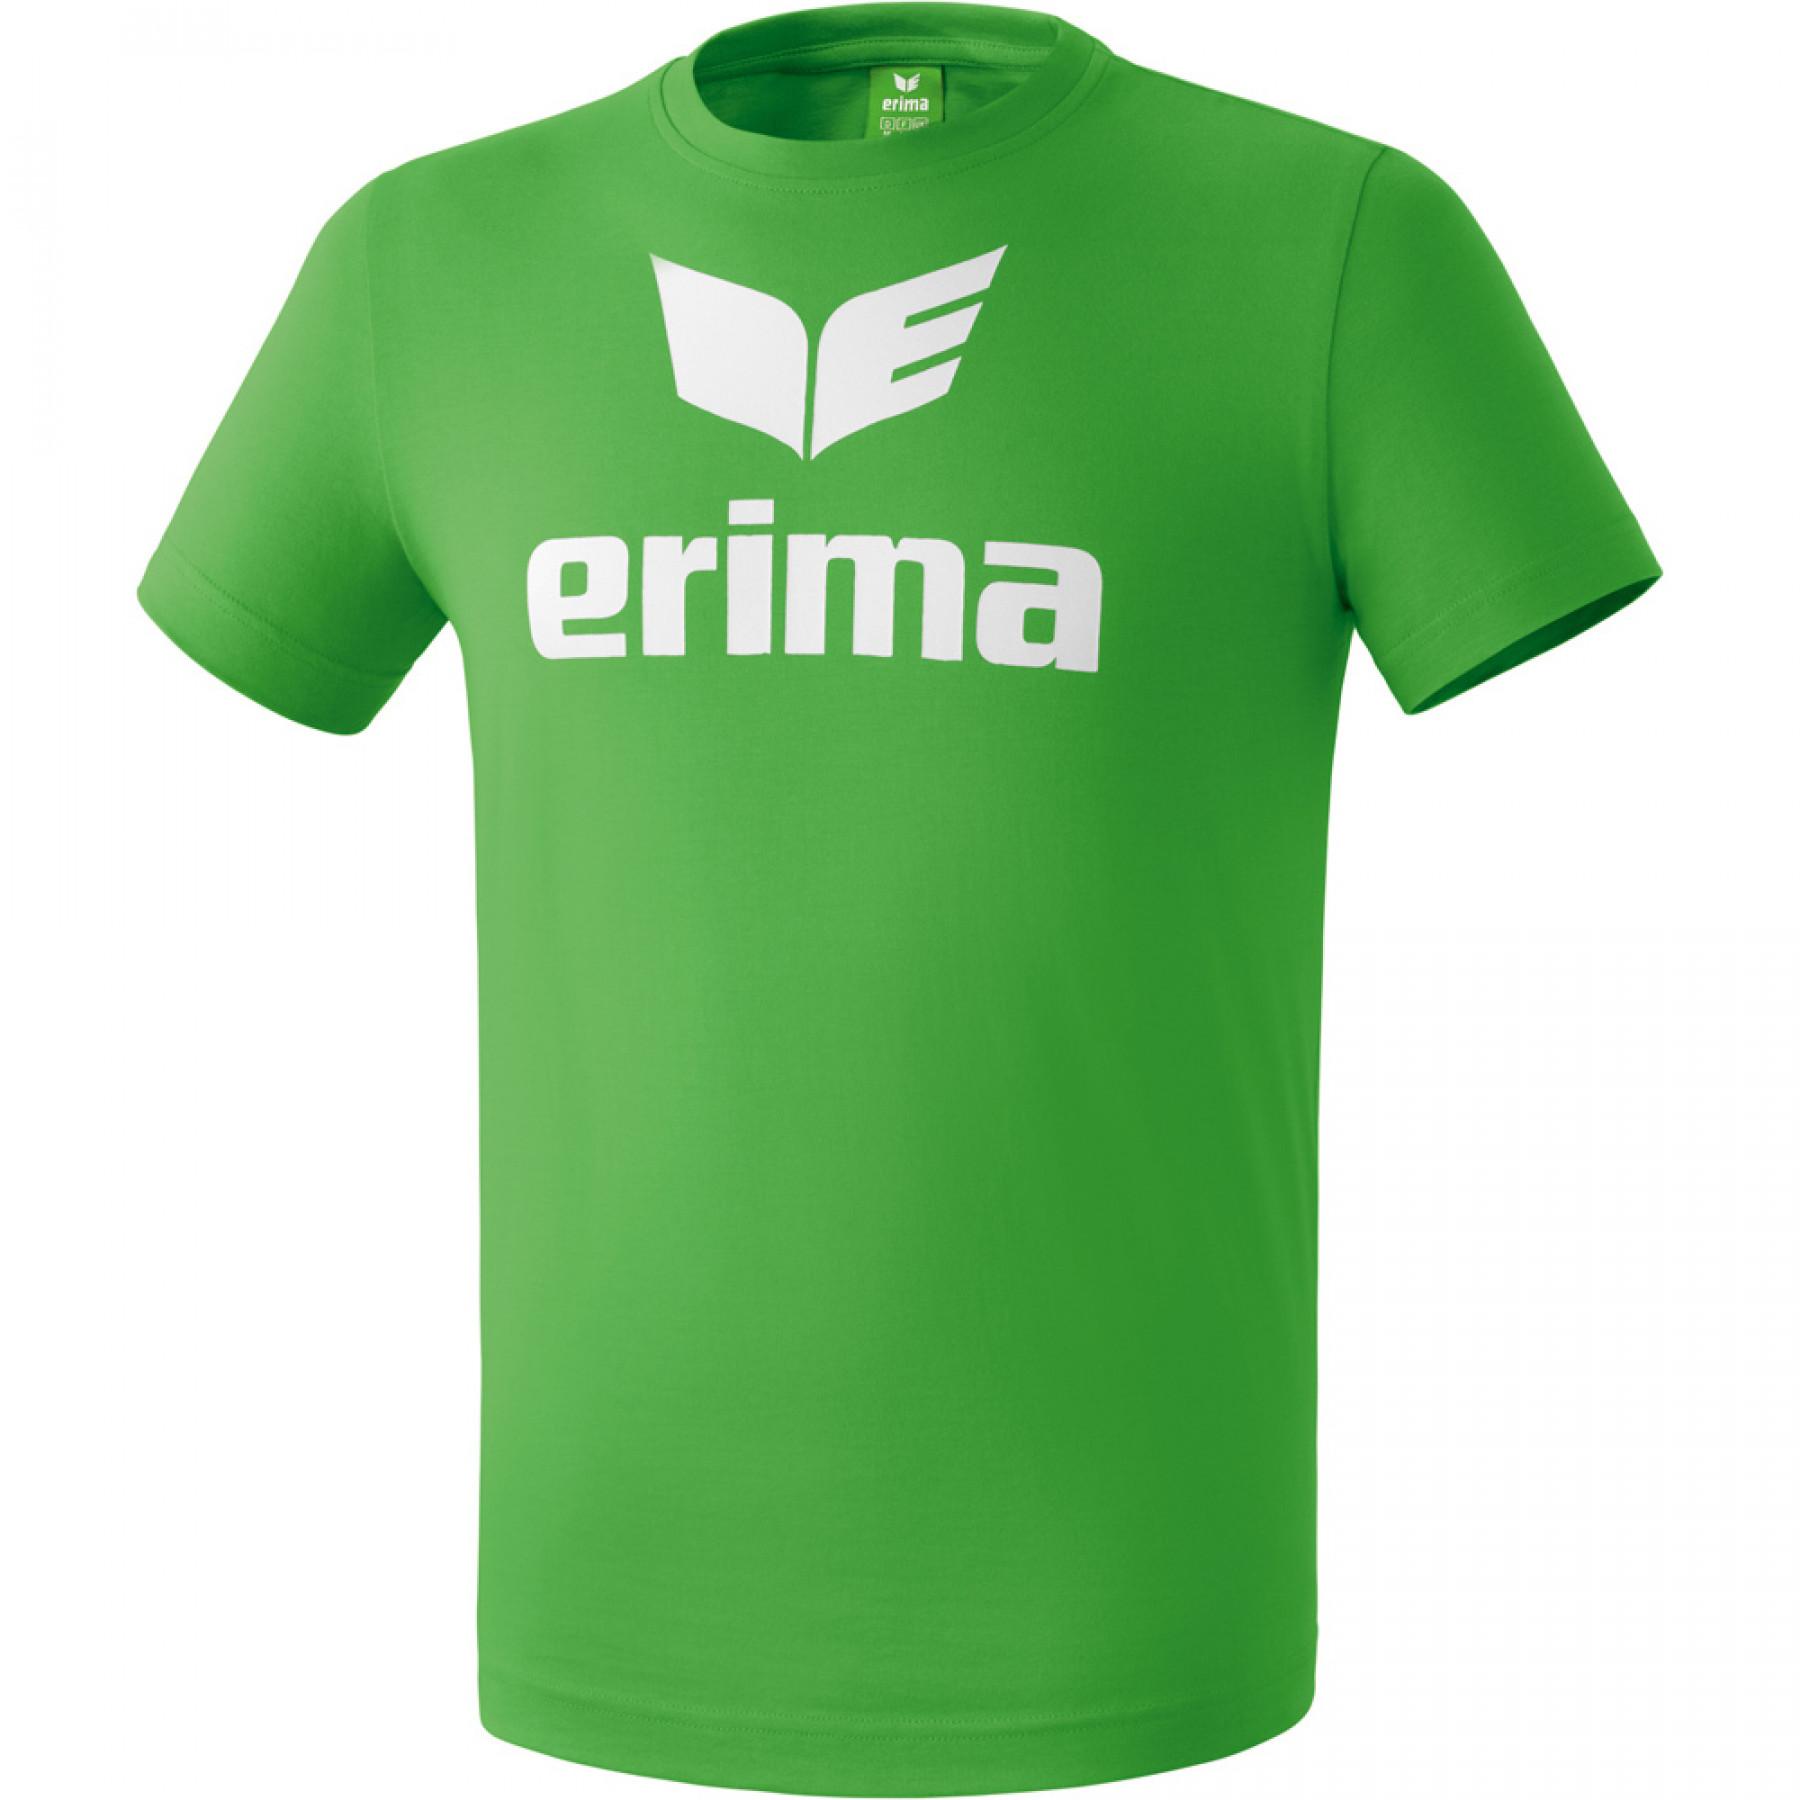 Koszulka dziecięca Erima Promo